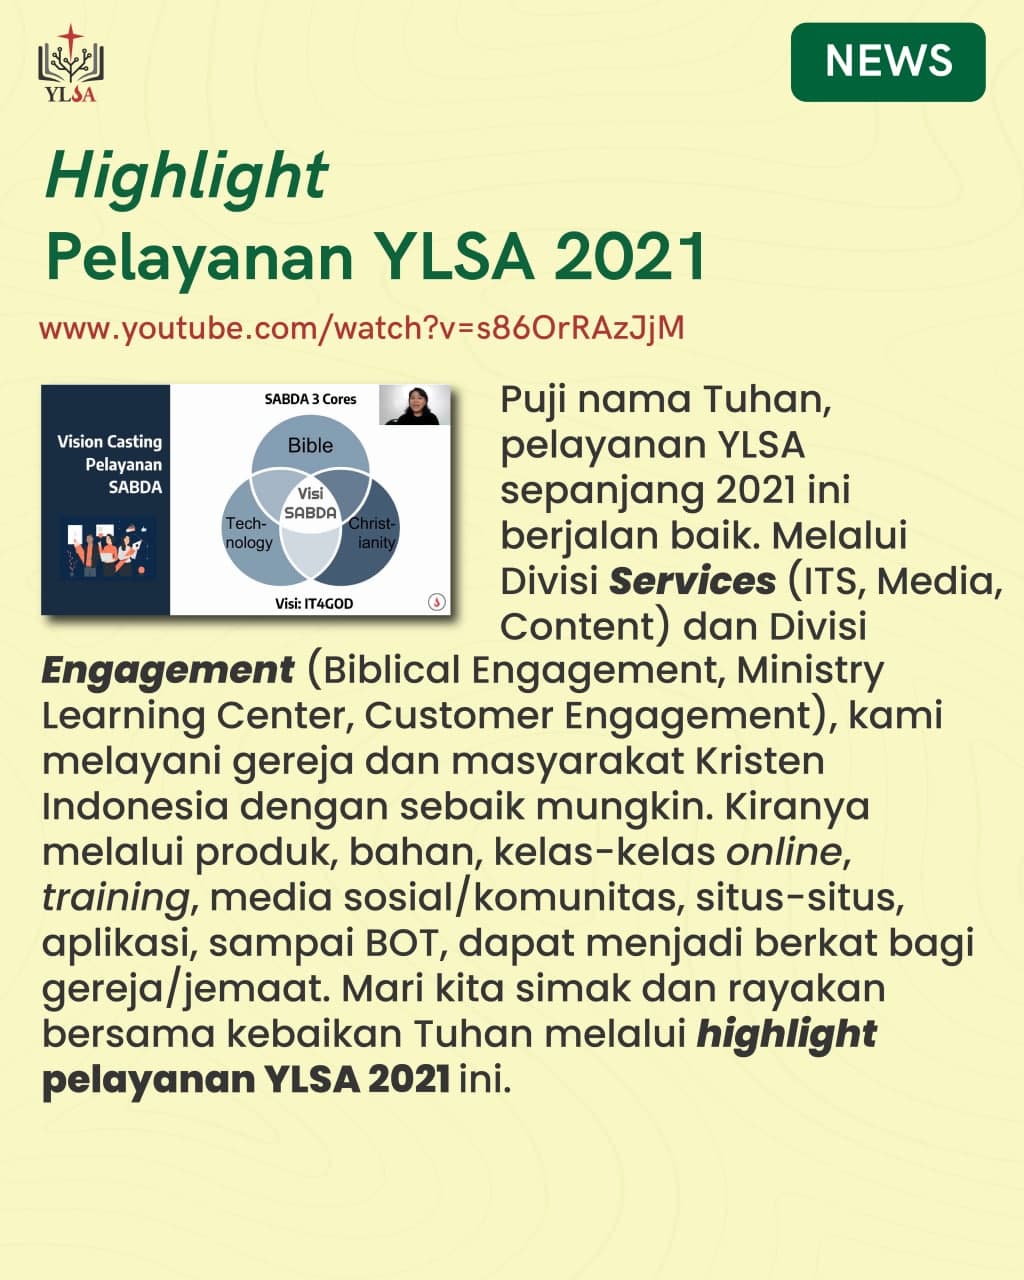 Highlight pelayanan YLSA 2021 dari Divisi ITS, Media, Content, BE, MLC, CE.